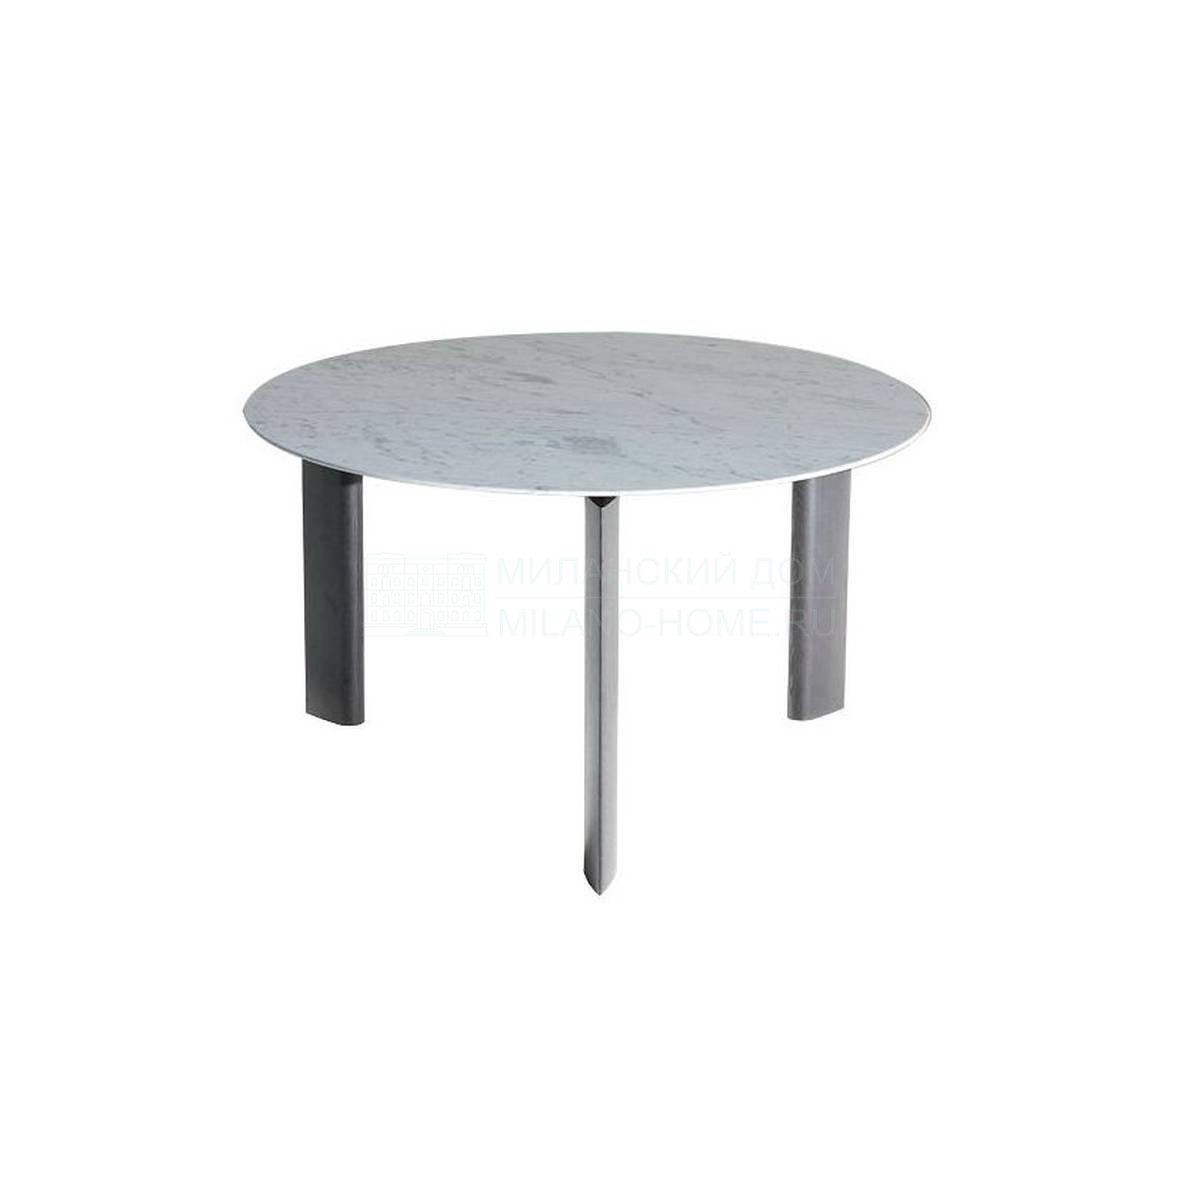 Круглый стол Oscar e gabriele round table из Италии фабрики DRIADE